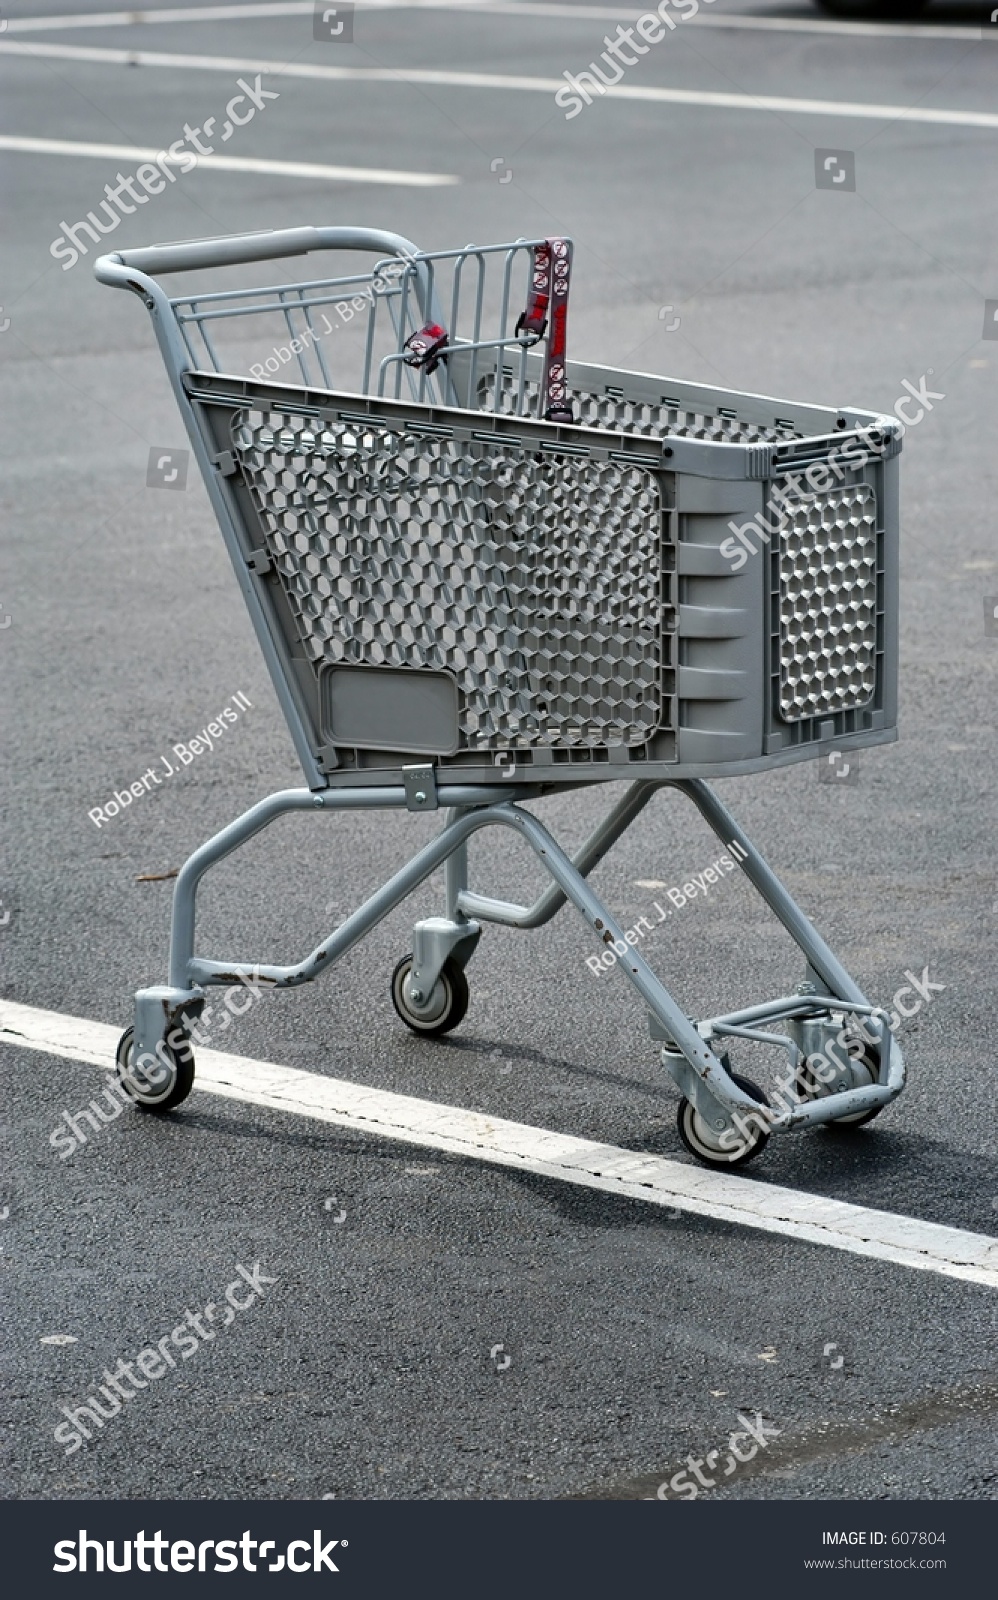 Shopping Buggy Parking Stock Photo 607804 | Shutterstock